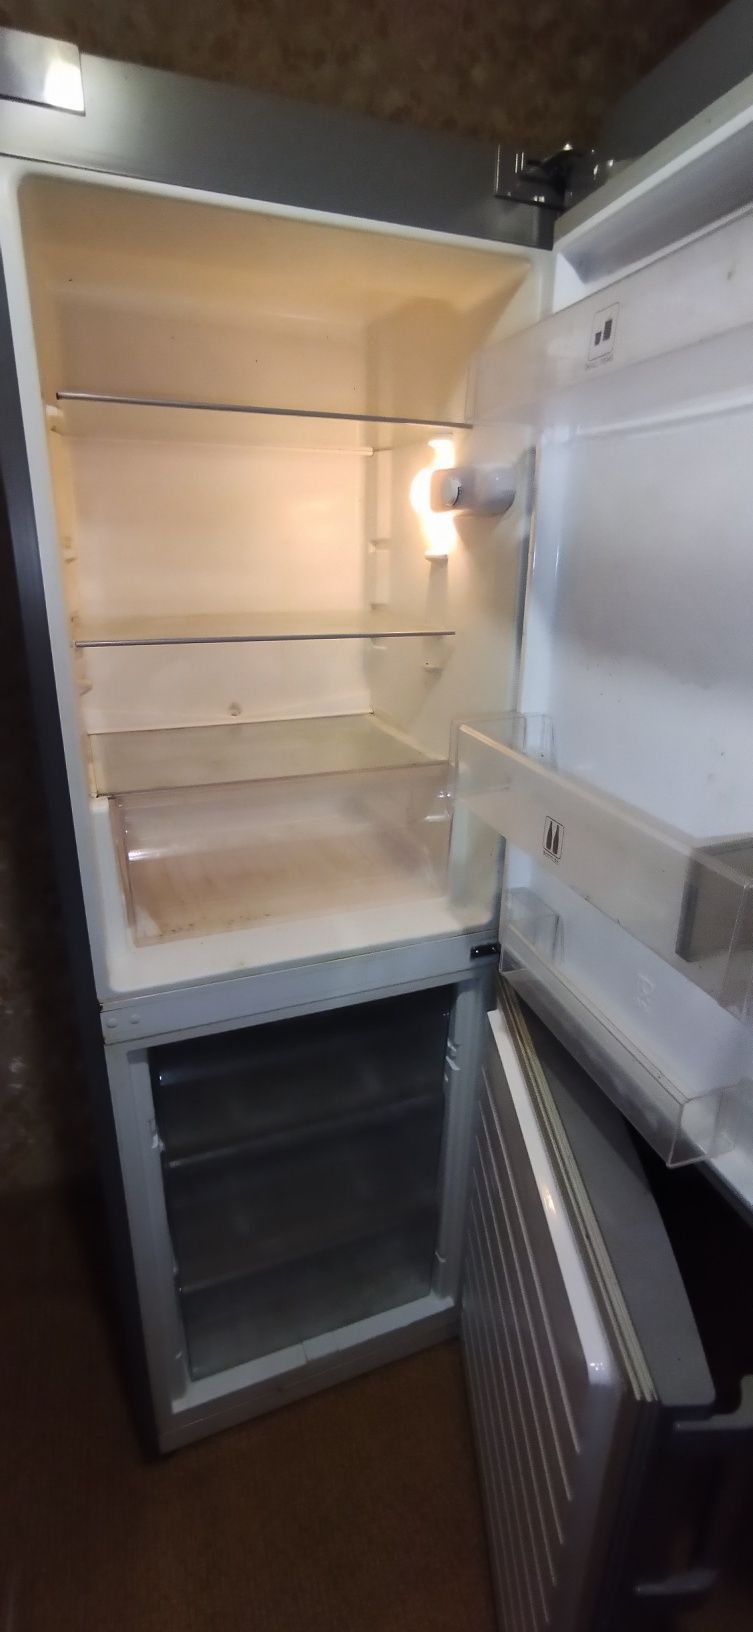 продам холодильник Whirlpool